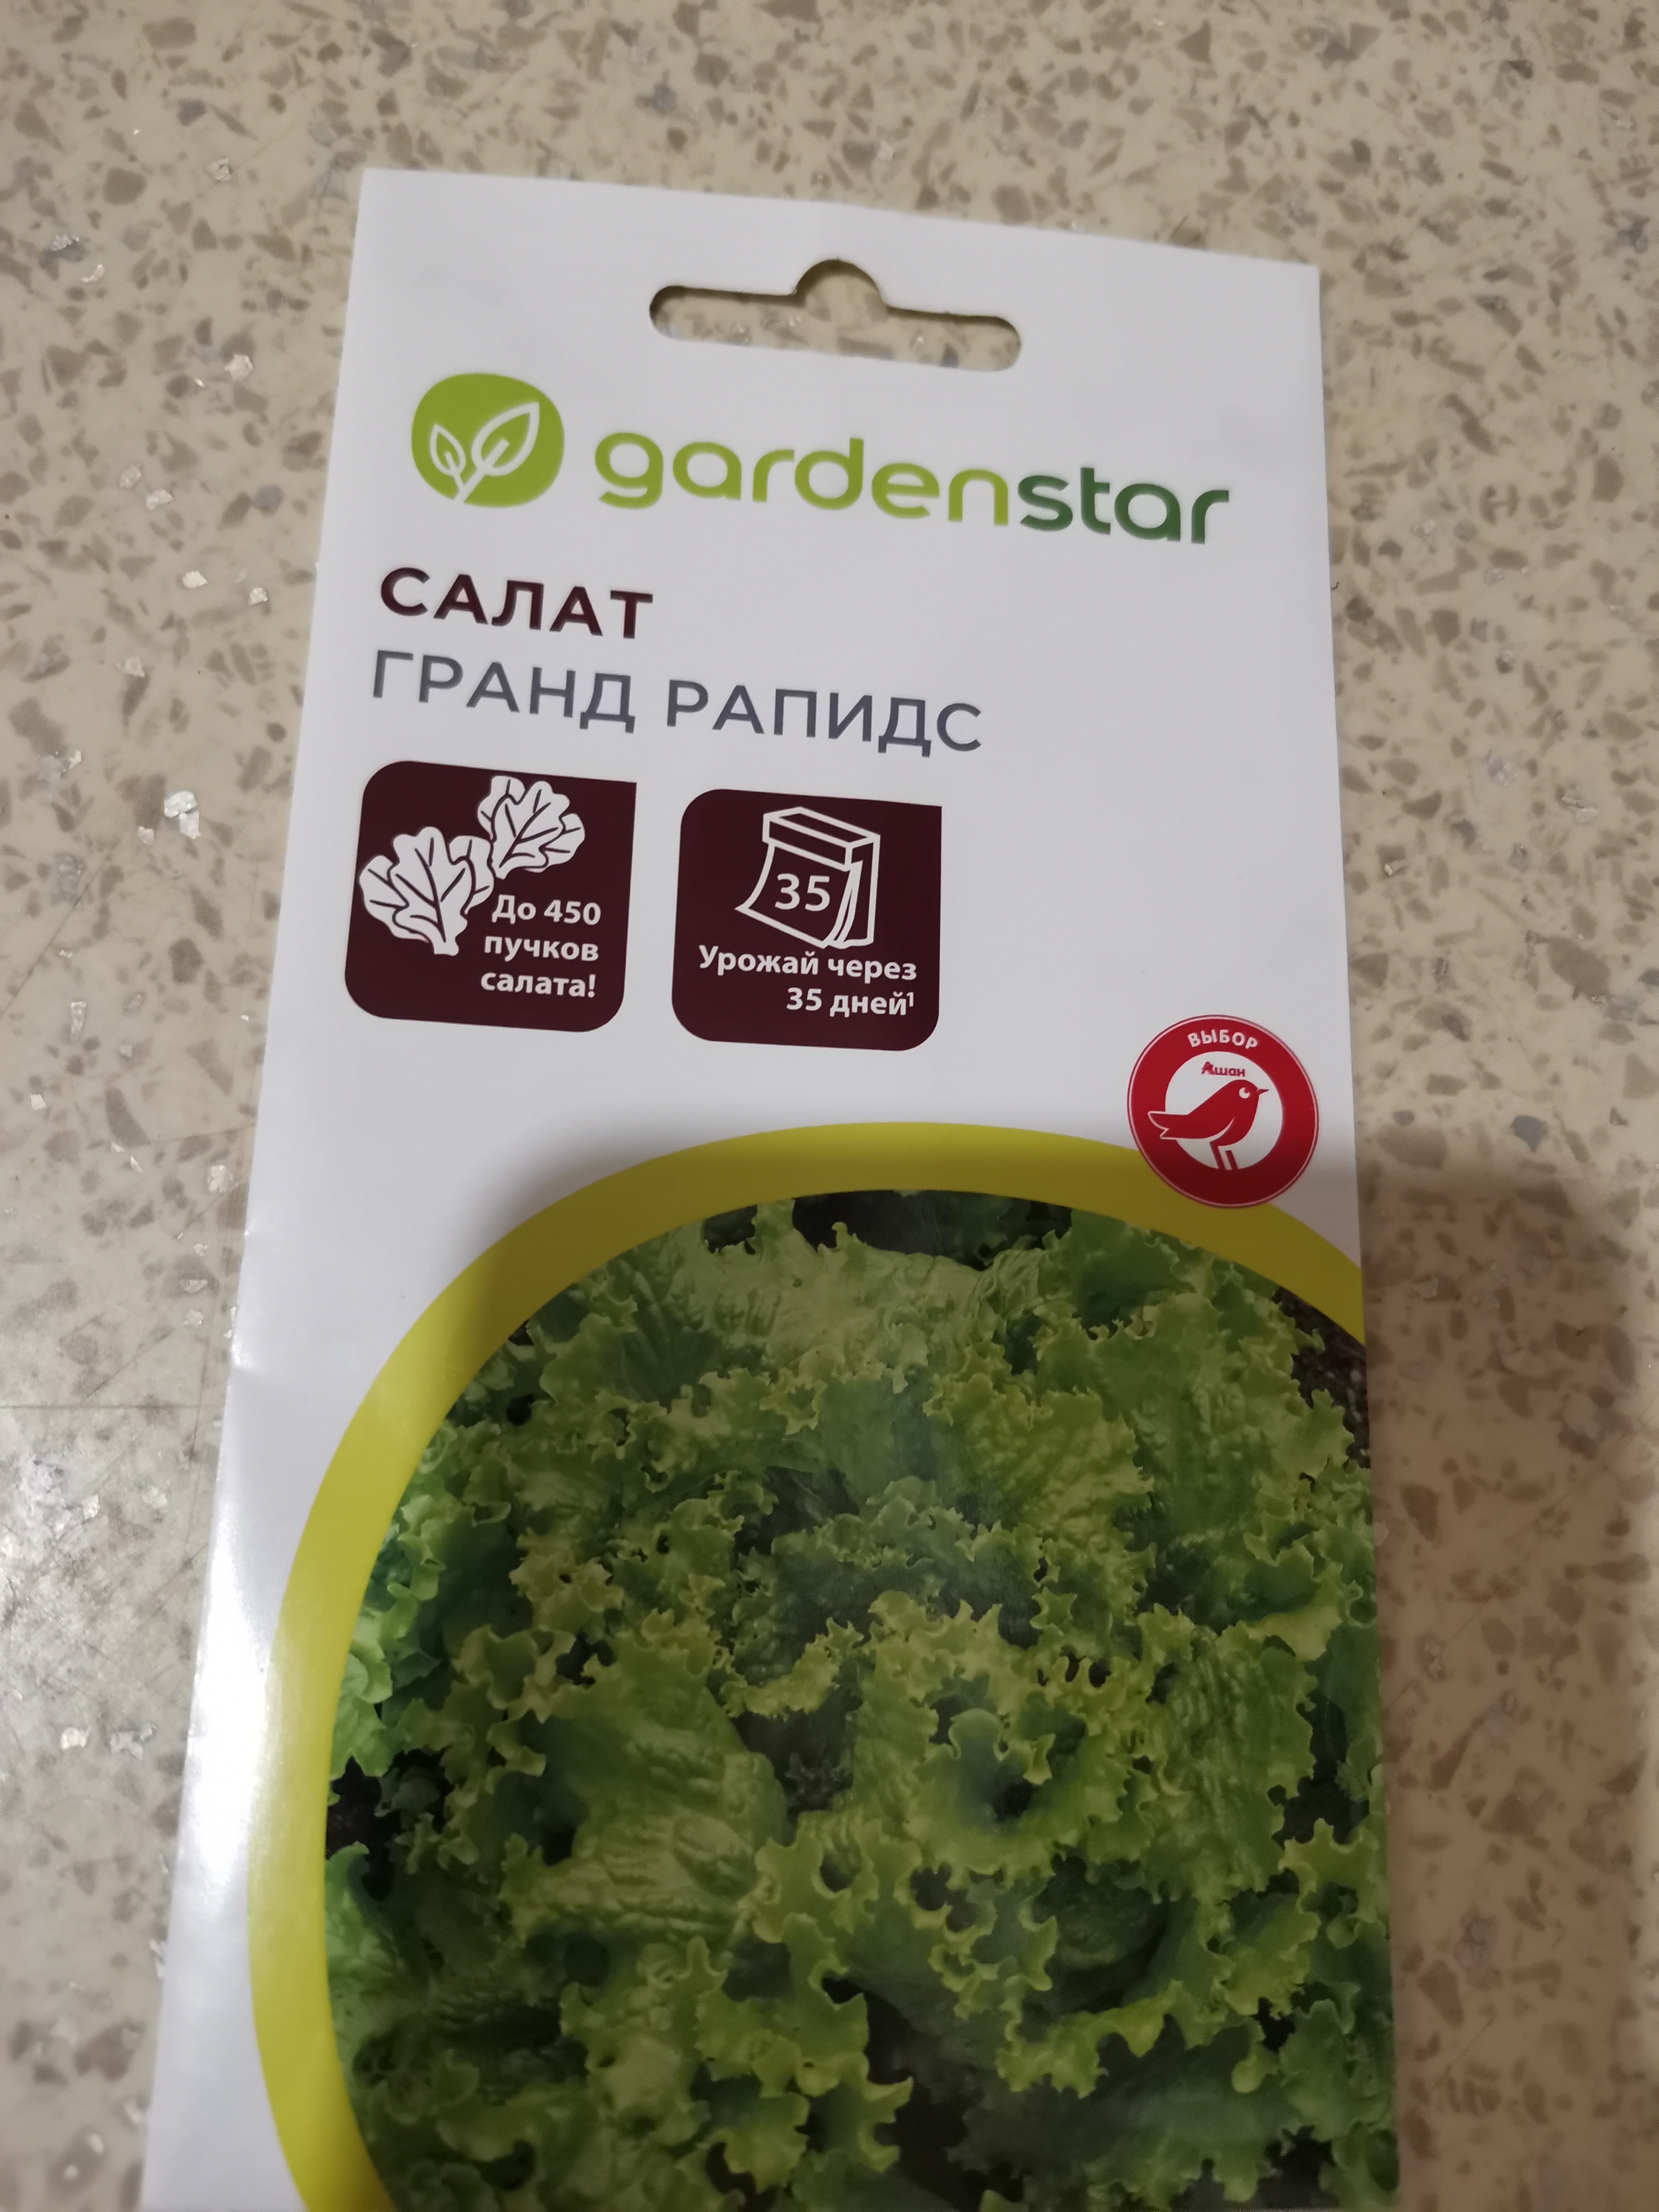 Семена салат Garden Star Гранд Рапидс 1 уп. - отзывы покупателей наМегамаркет